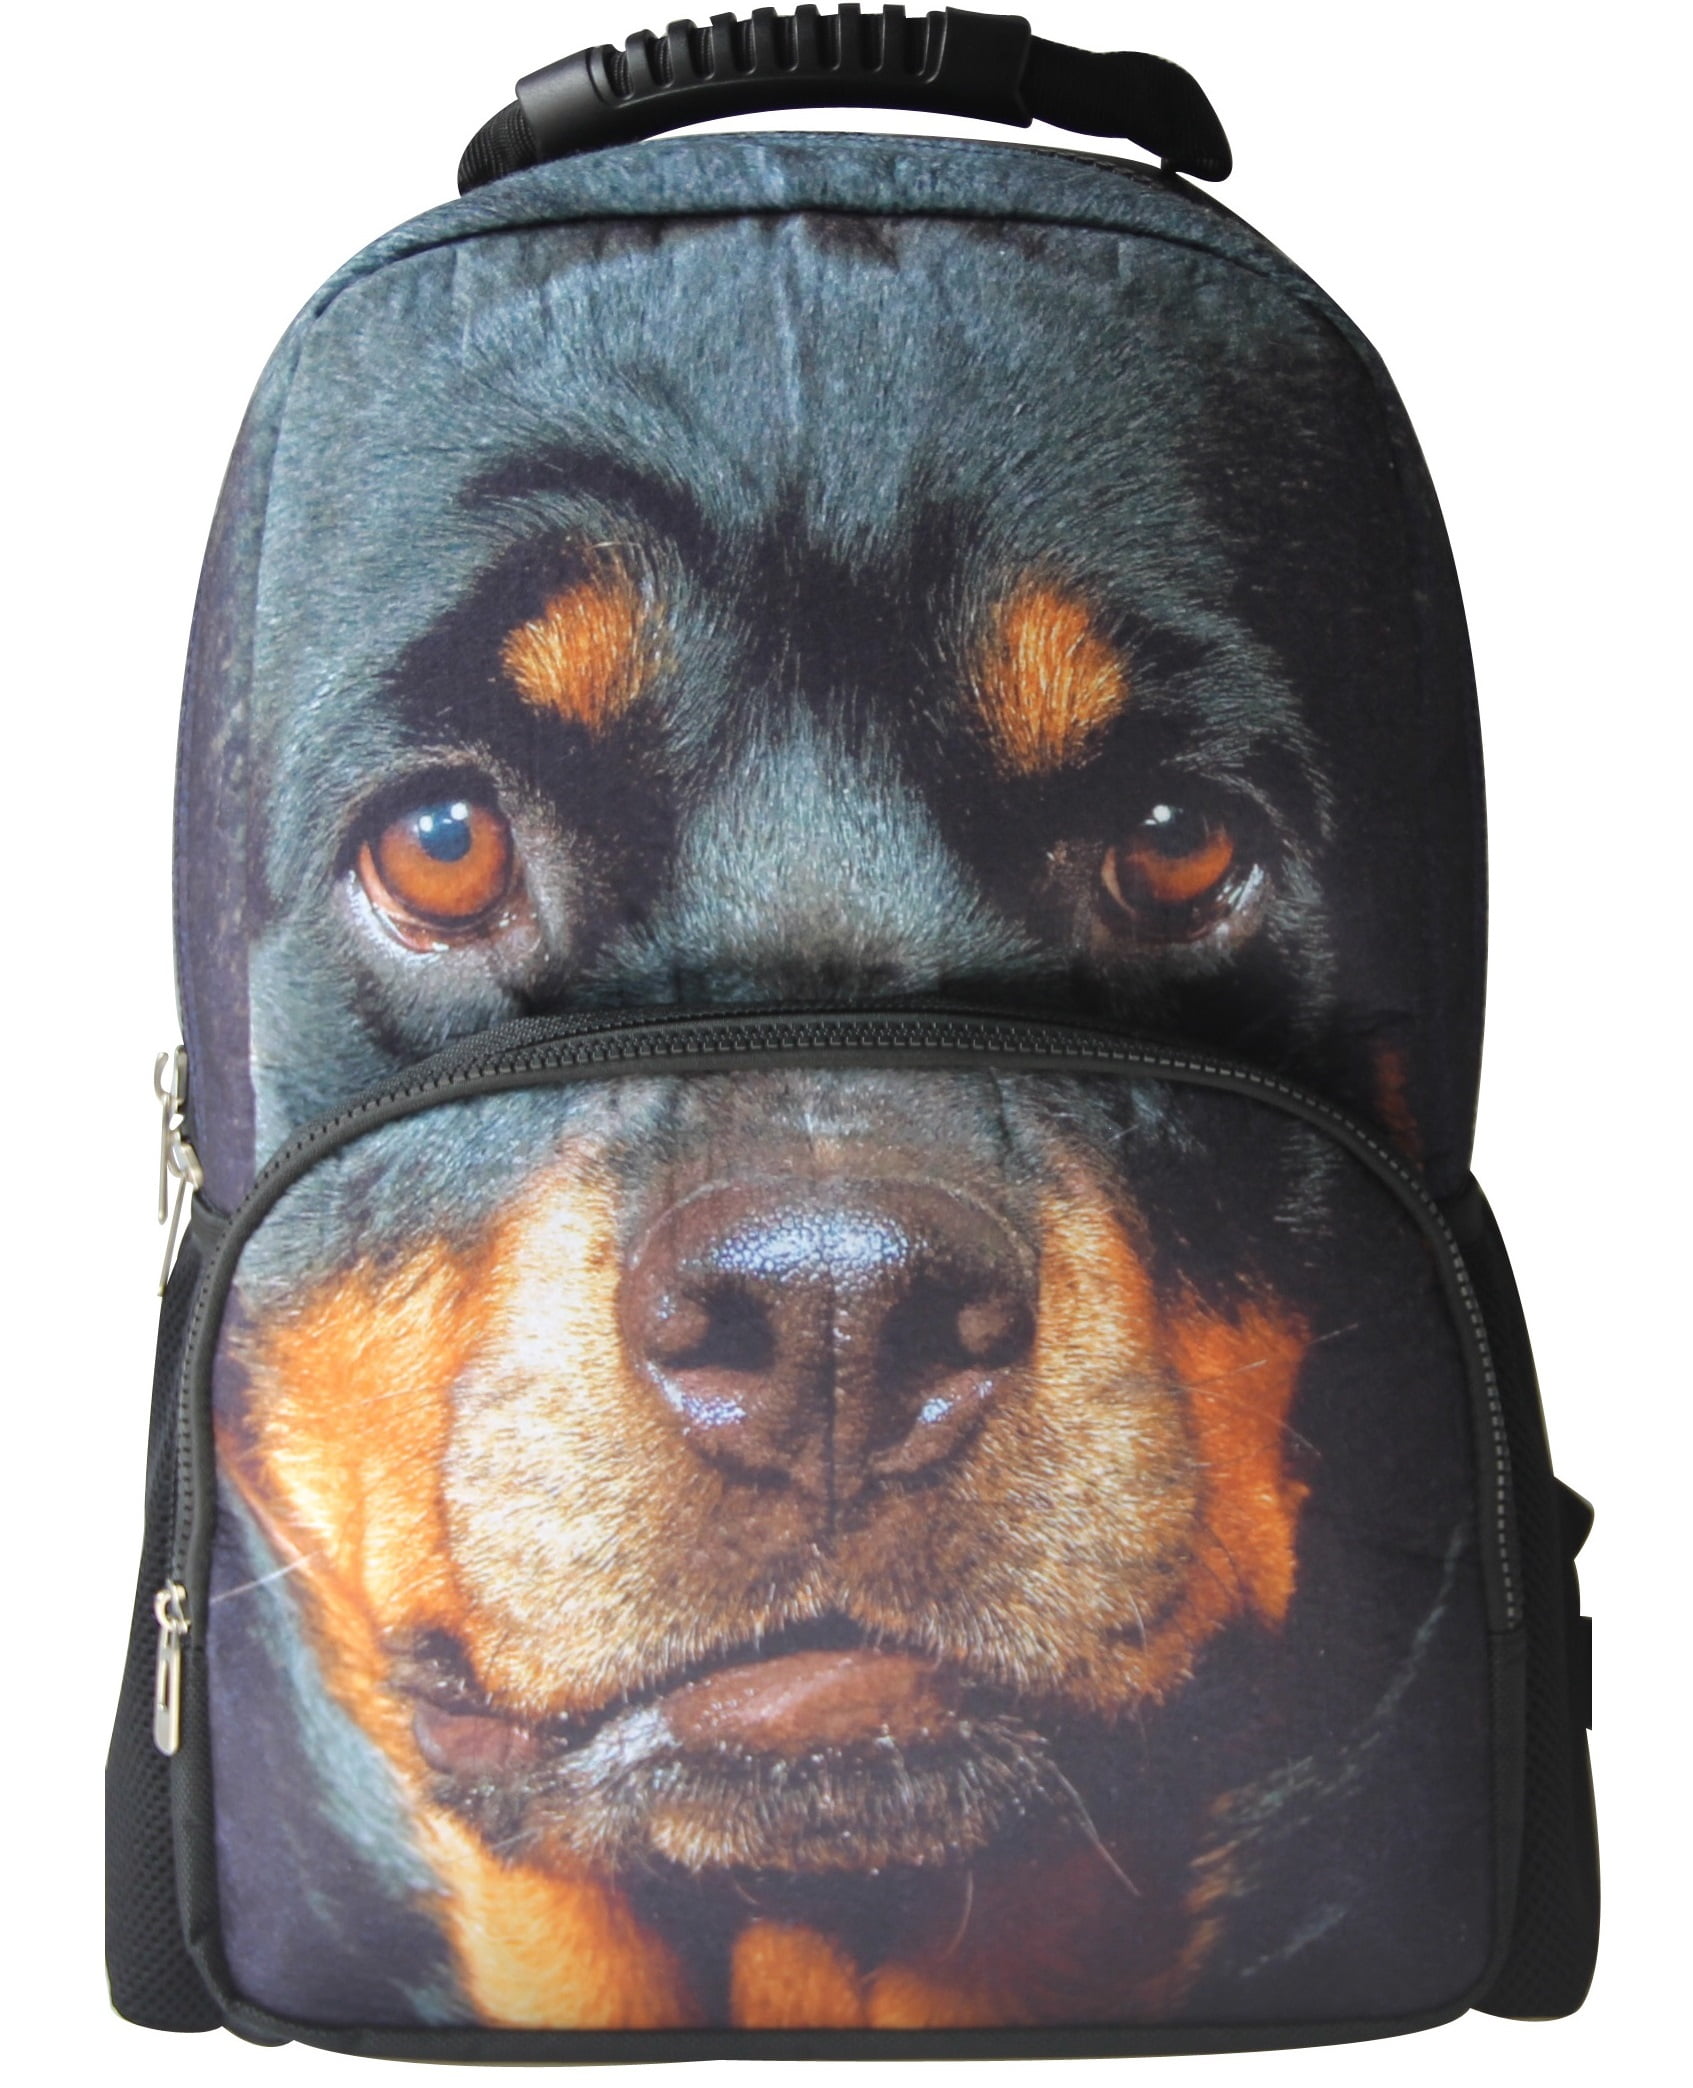 Rottweiler Dog Backpack 14 Inch Laptop Daypack Bookbag for Travel College School 